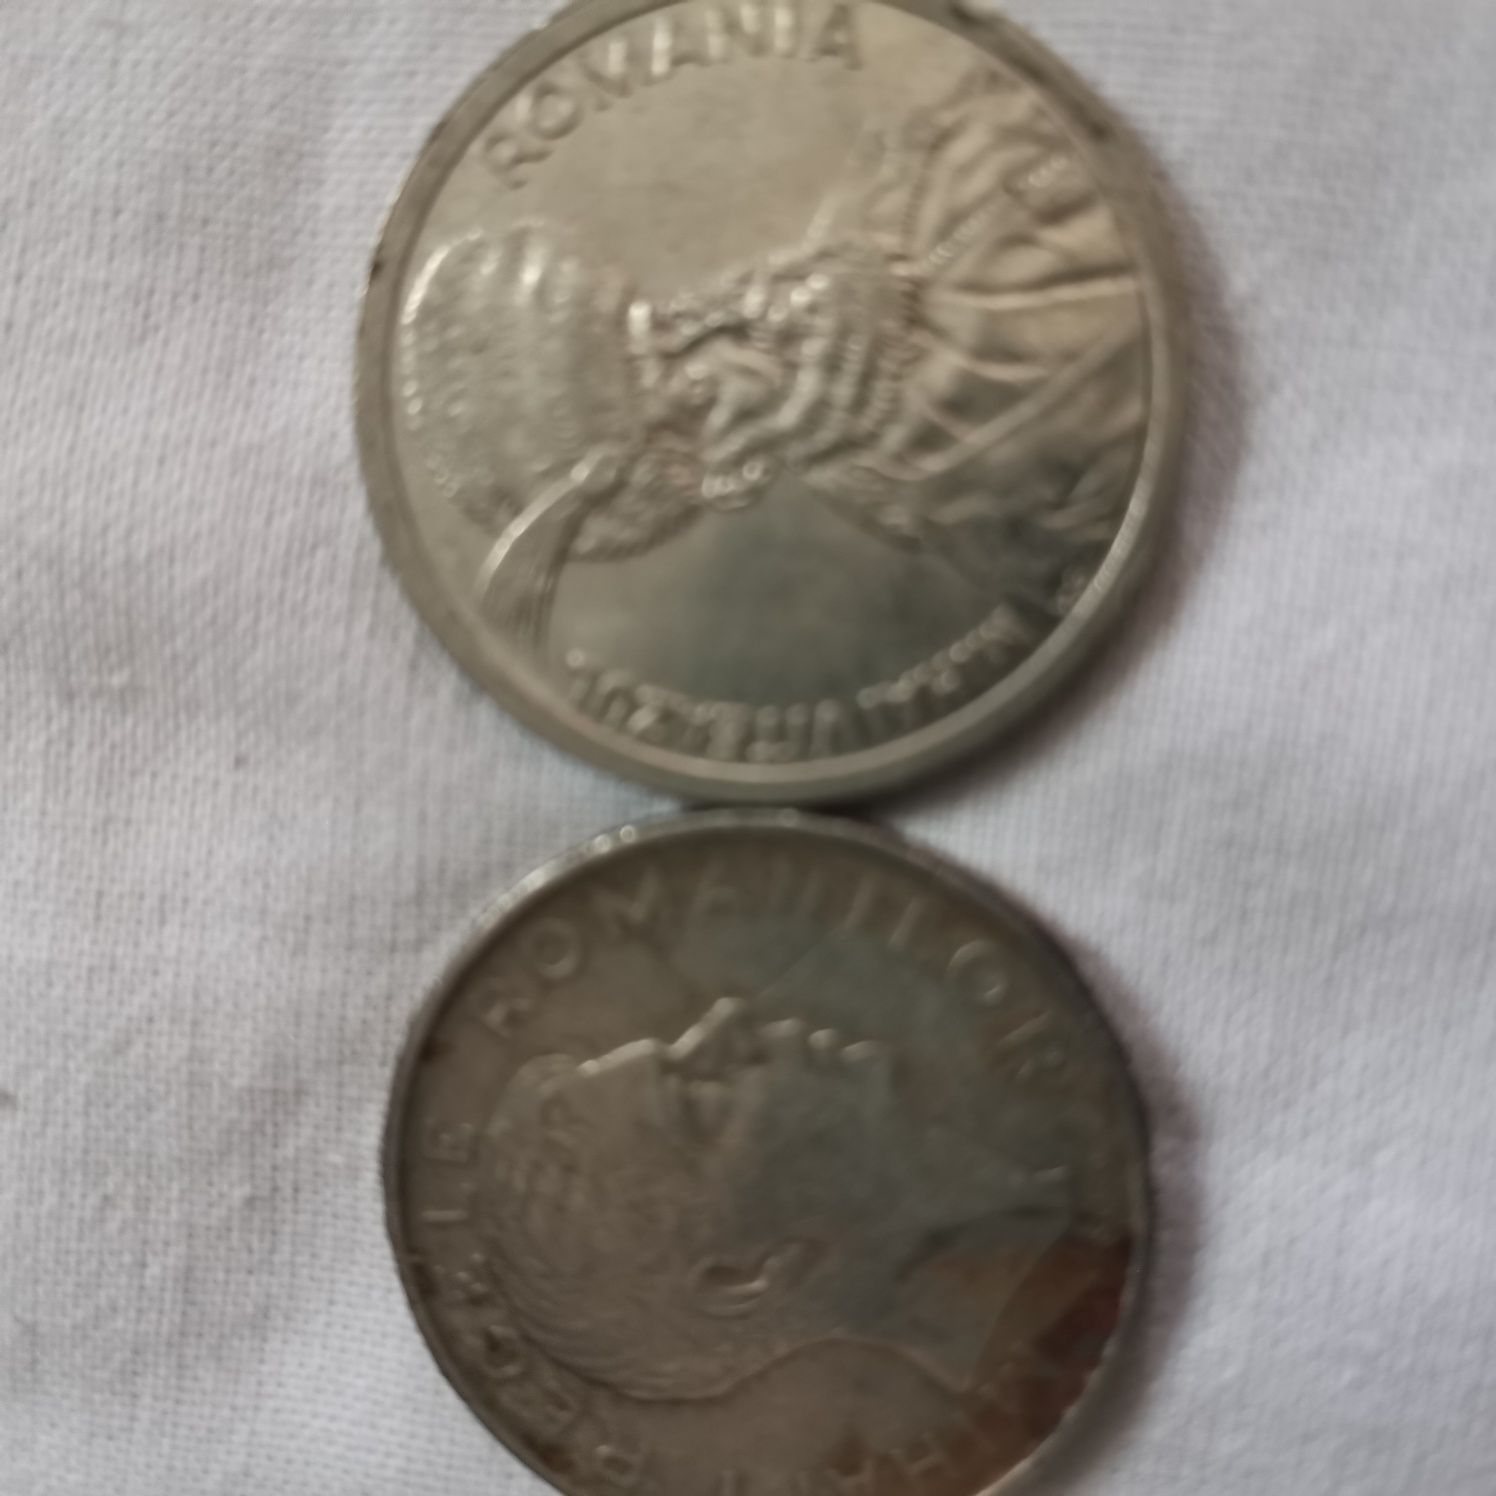 Monede vechi și valoroase